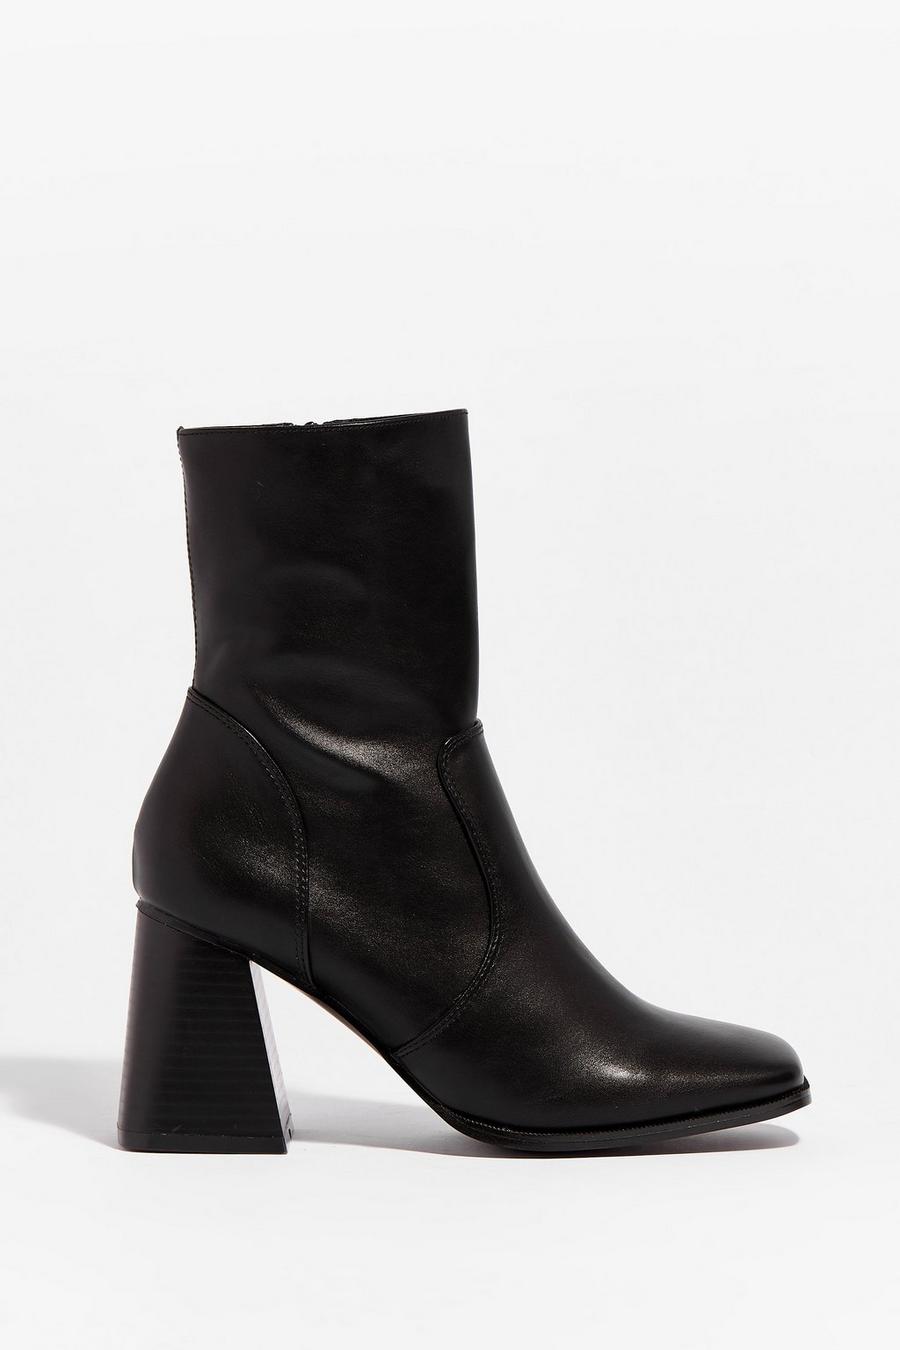 Black Faux Leather Block Heel Zip Up Boots